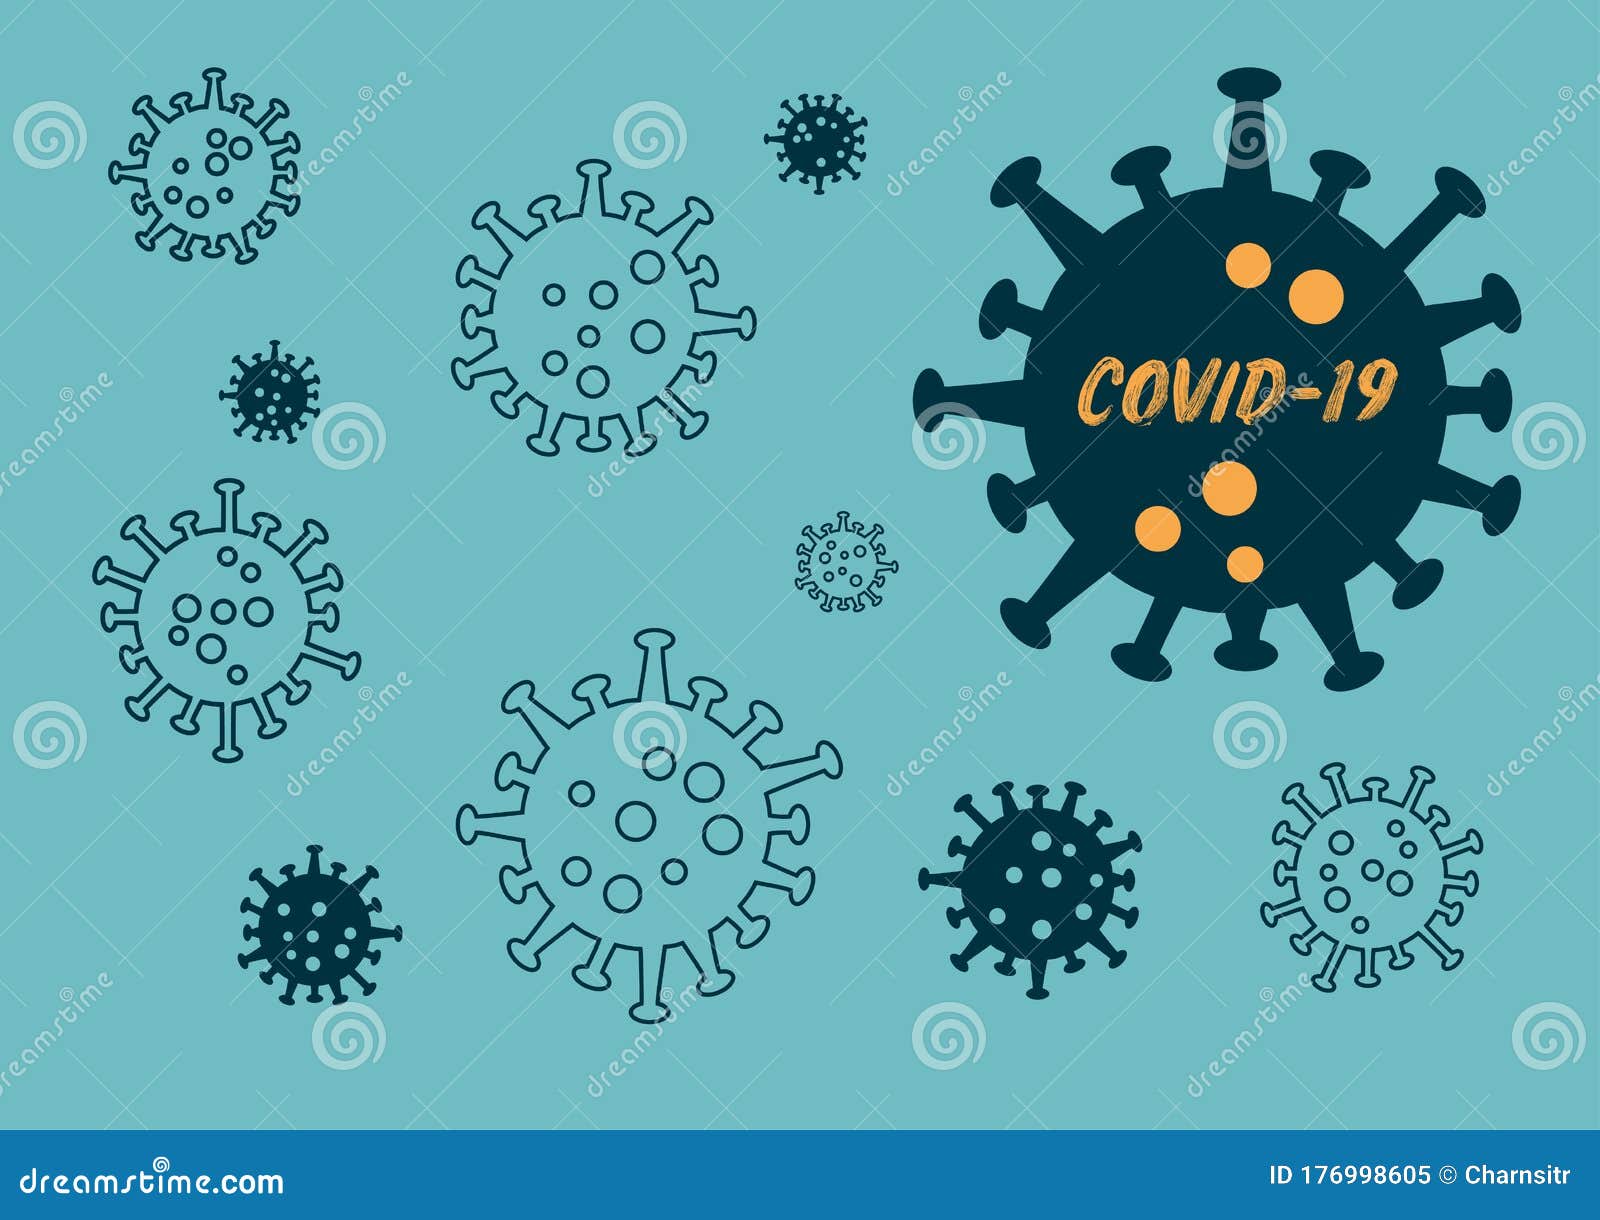 covid-19 or corona virus outtbreak background